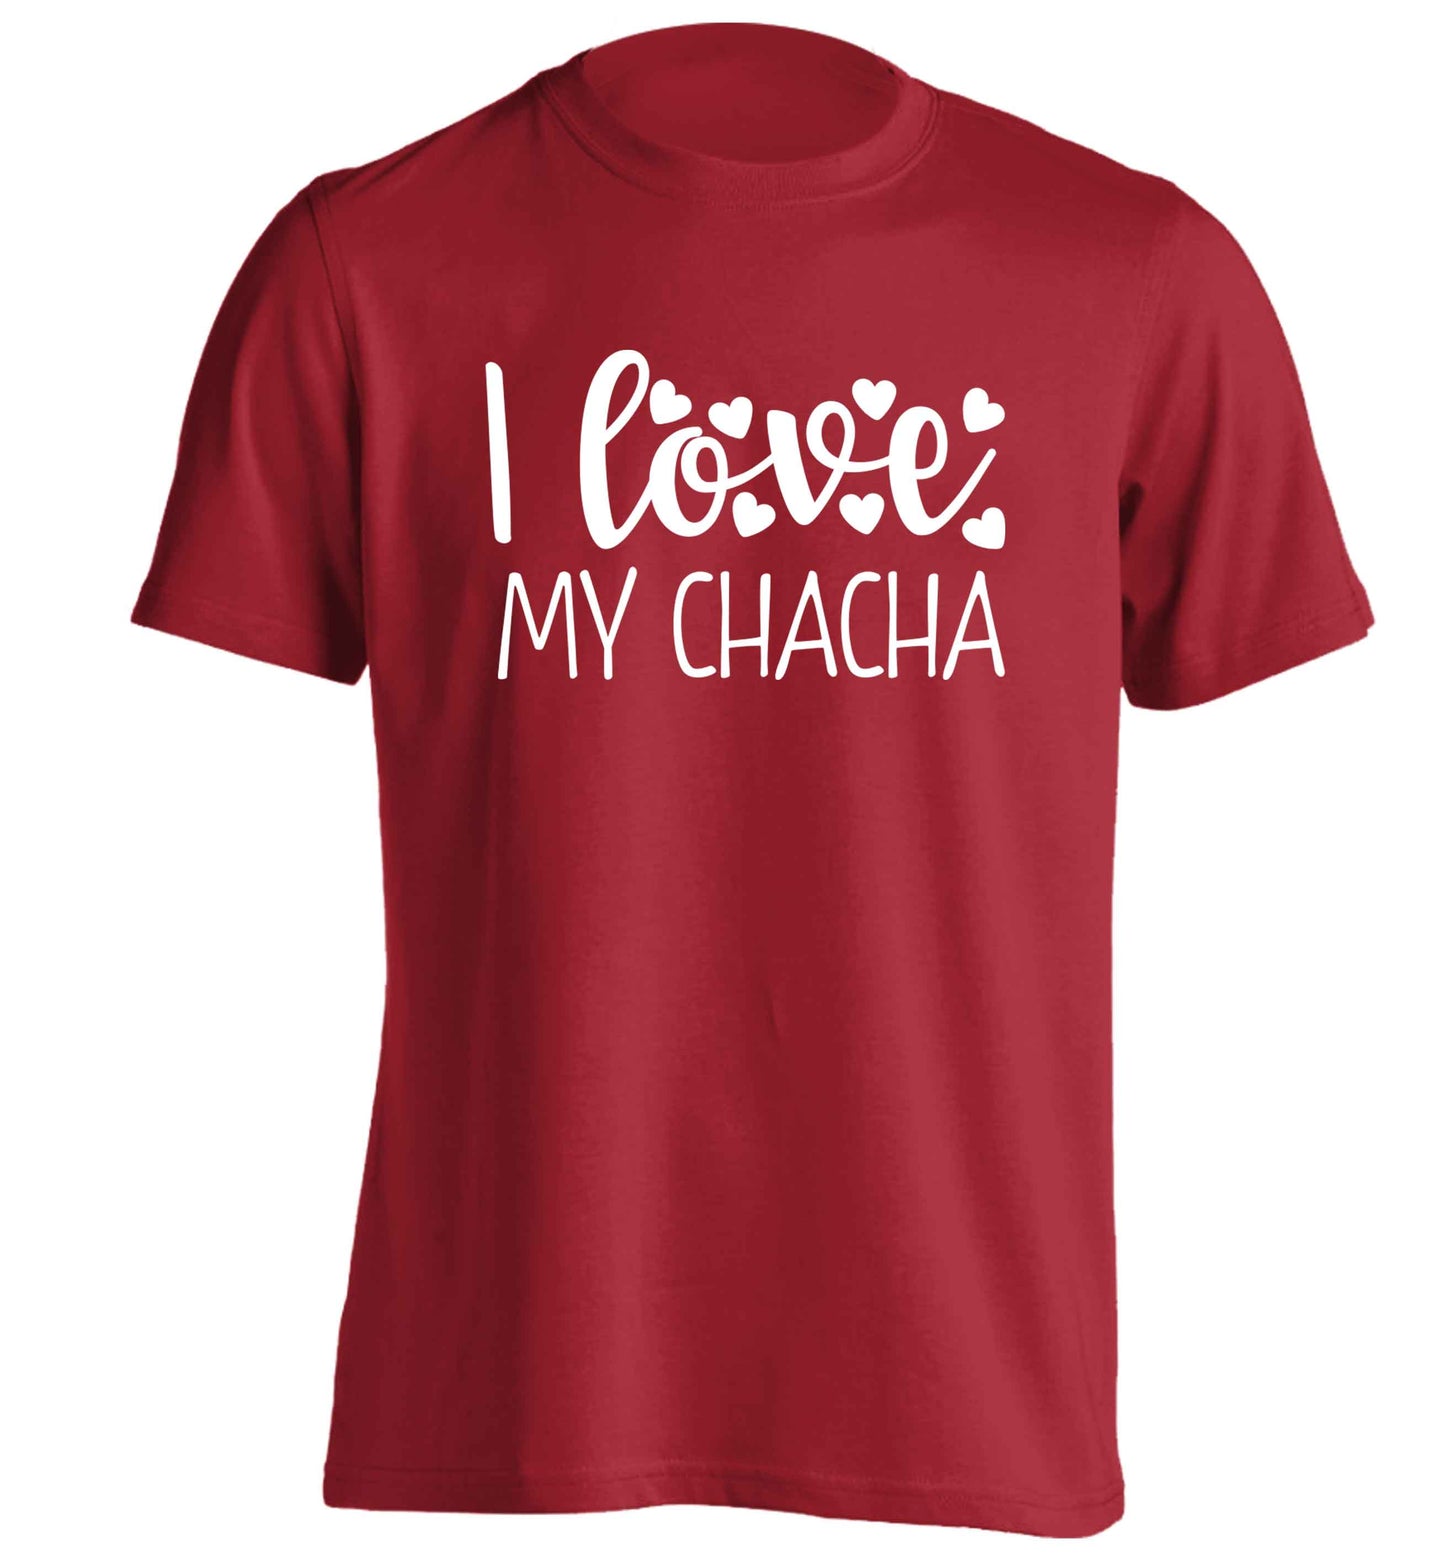 I love my chacha adults unisex red Tshirt 2XL